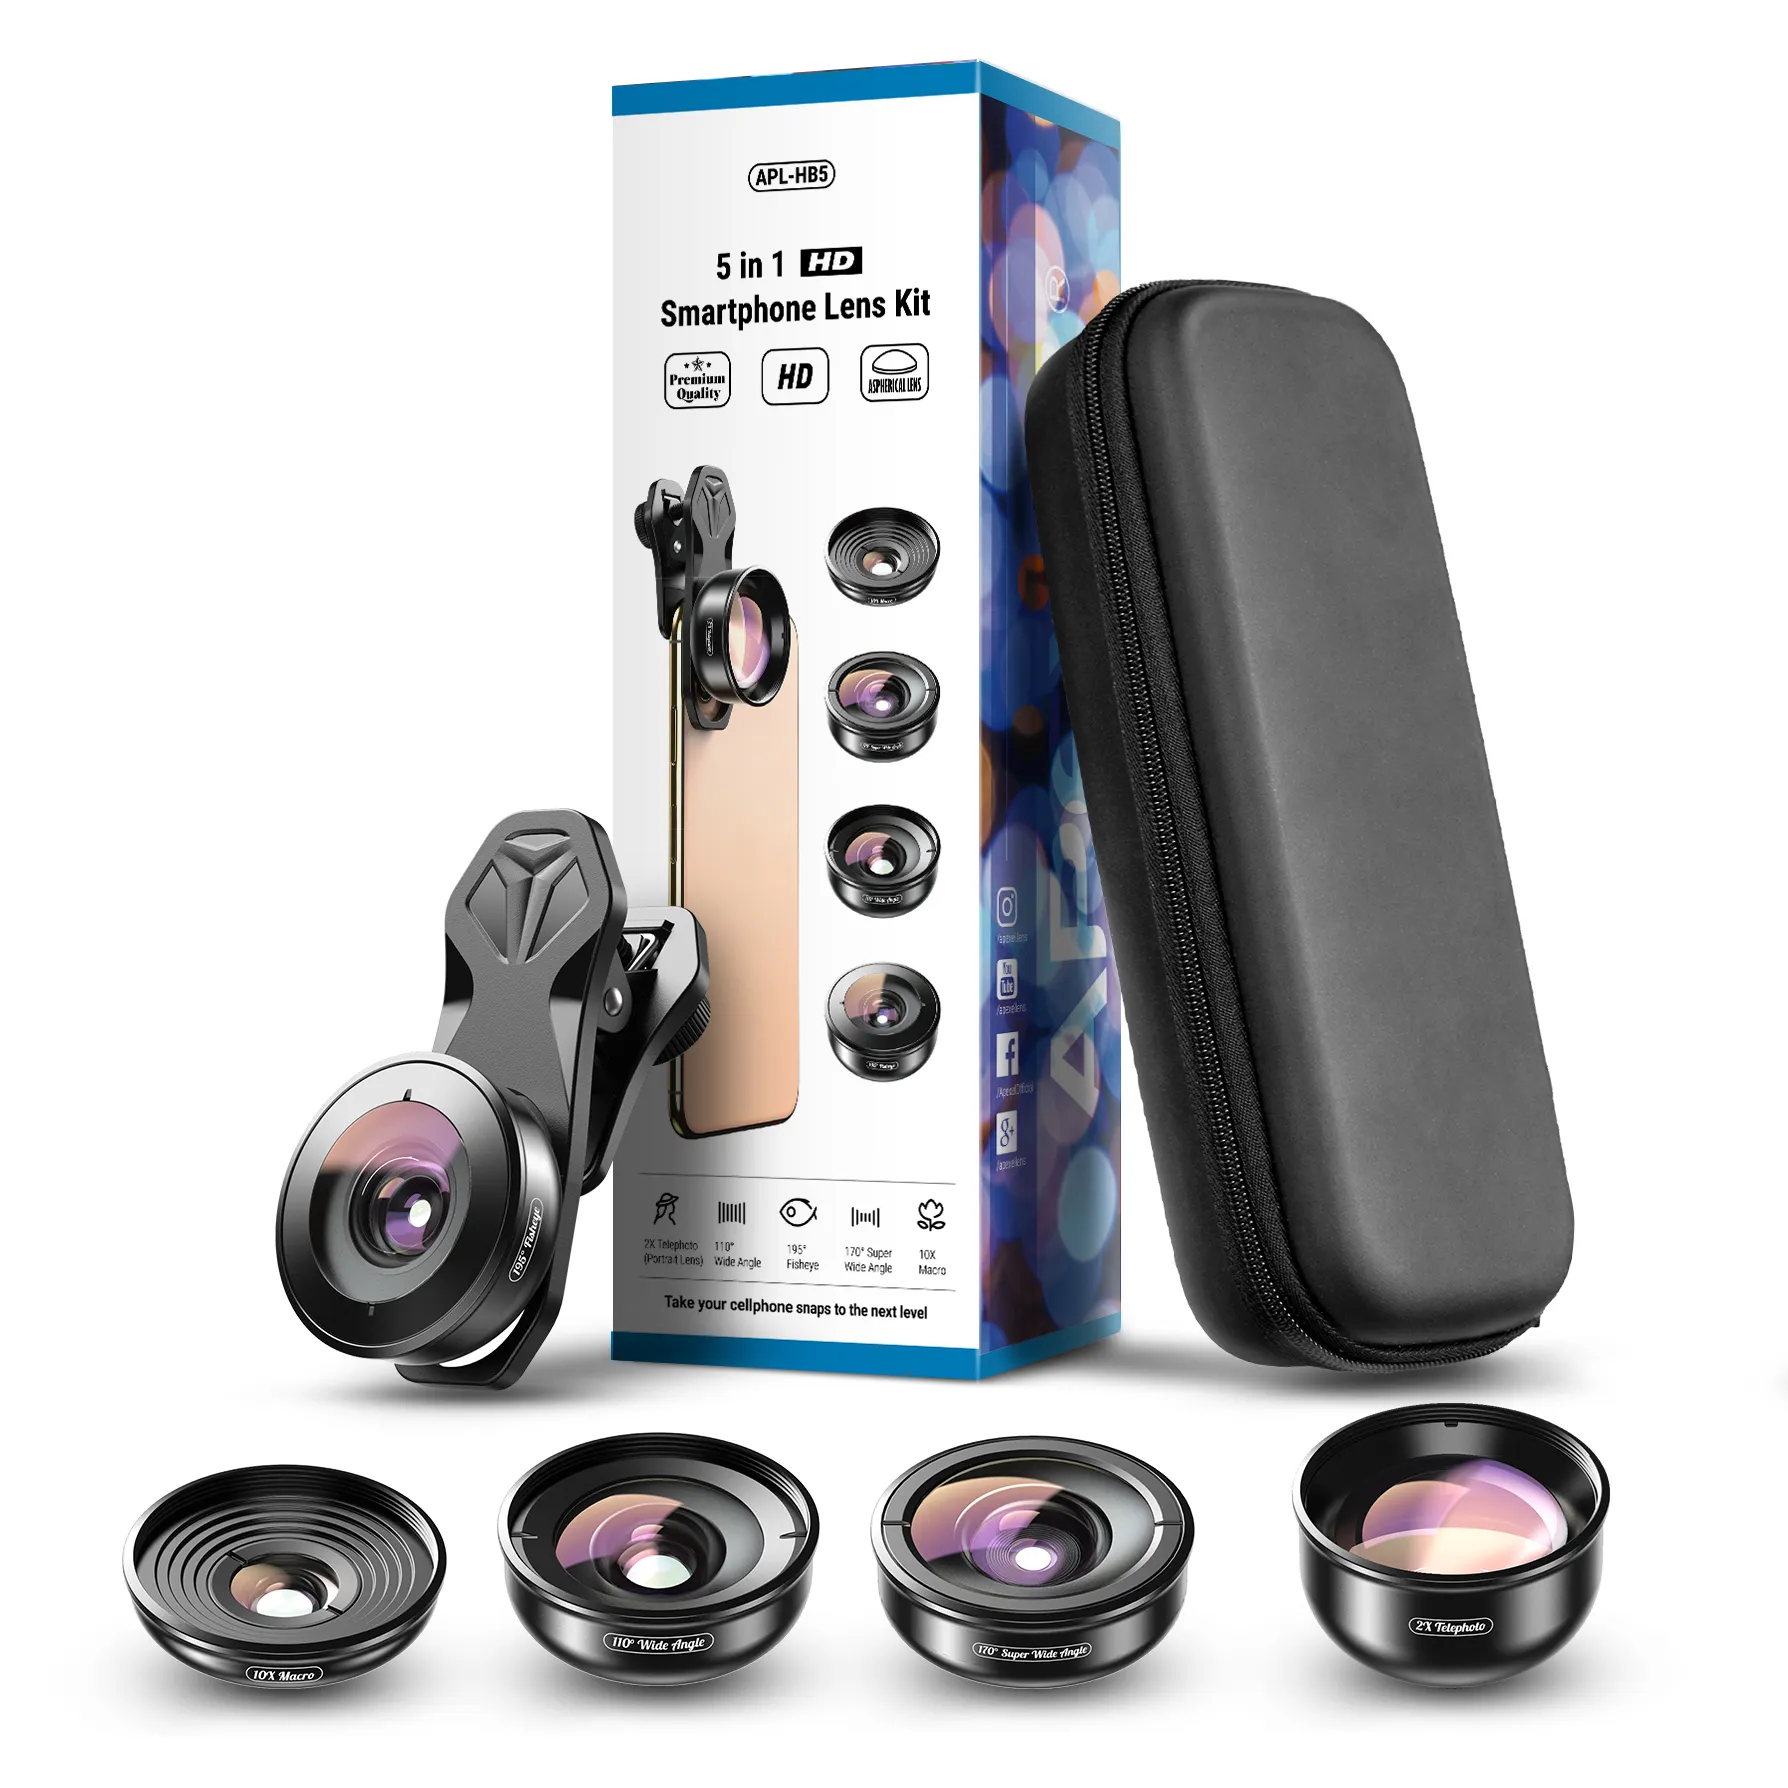 Objectif pour téléphone portable 5 en 1, caméra, fisheye, téléobjectif grand angle, macro, lentille pour téléphone portable, nouvelle collection